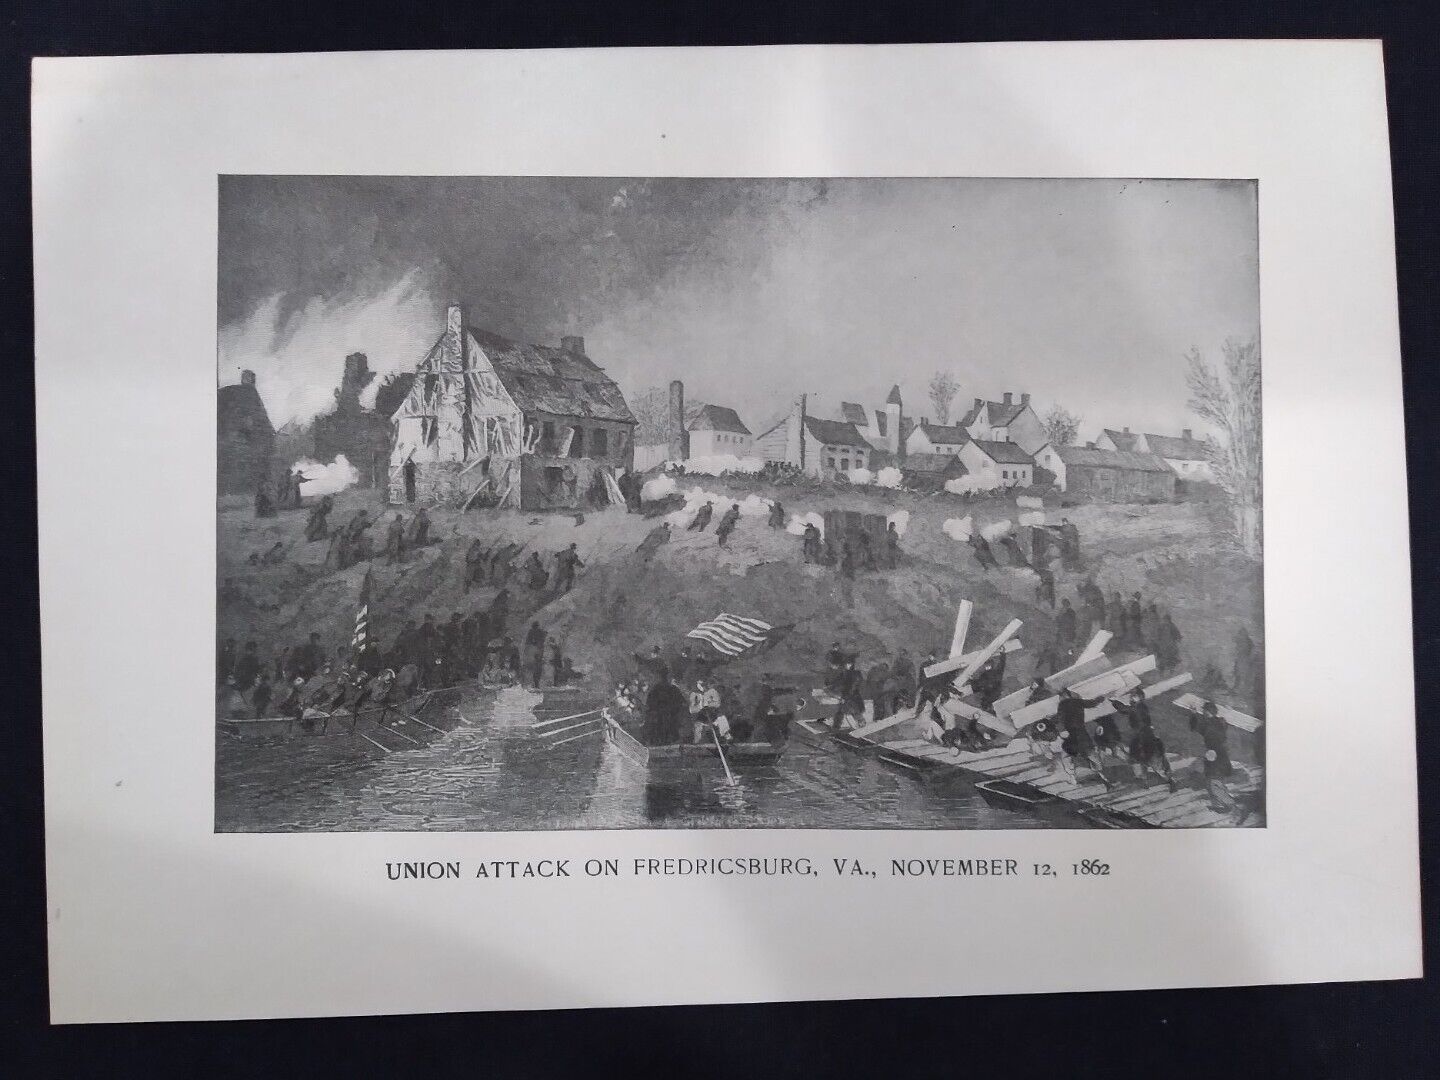 1898 Civil War Print - Union Attack on Fredricsburg, Virginia